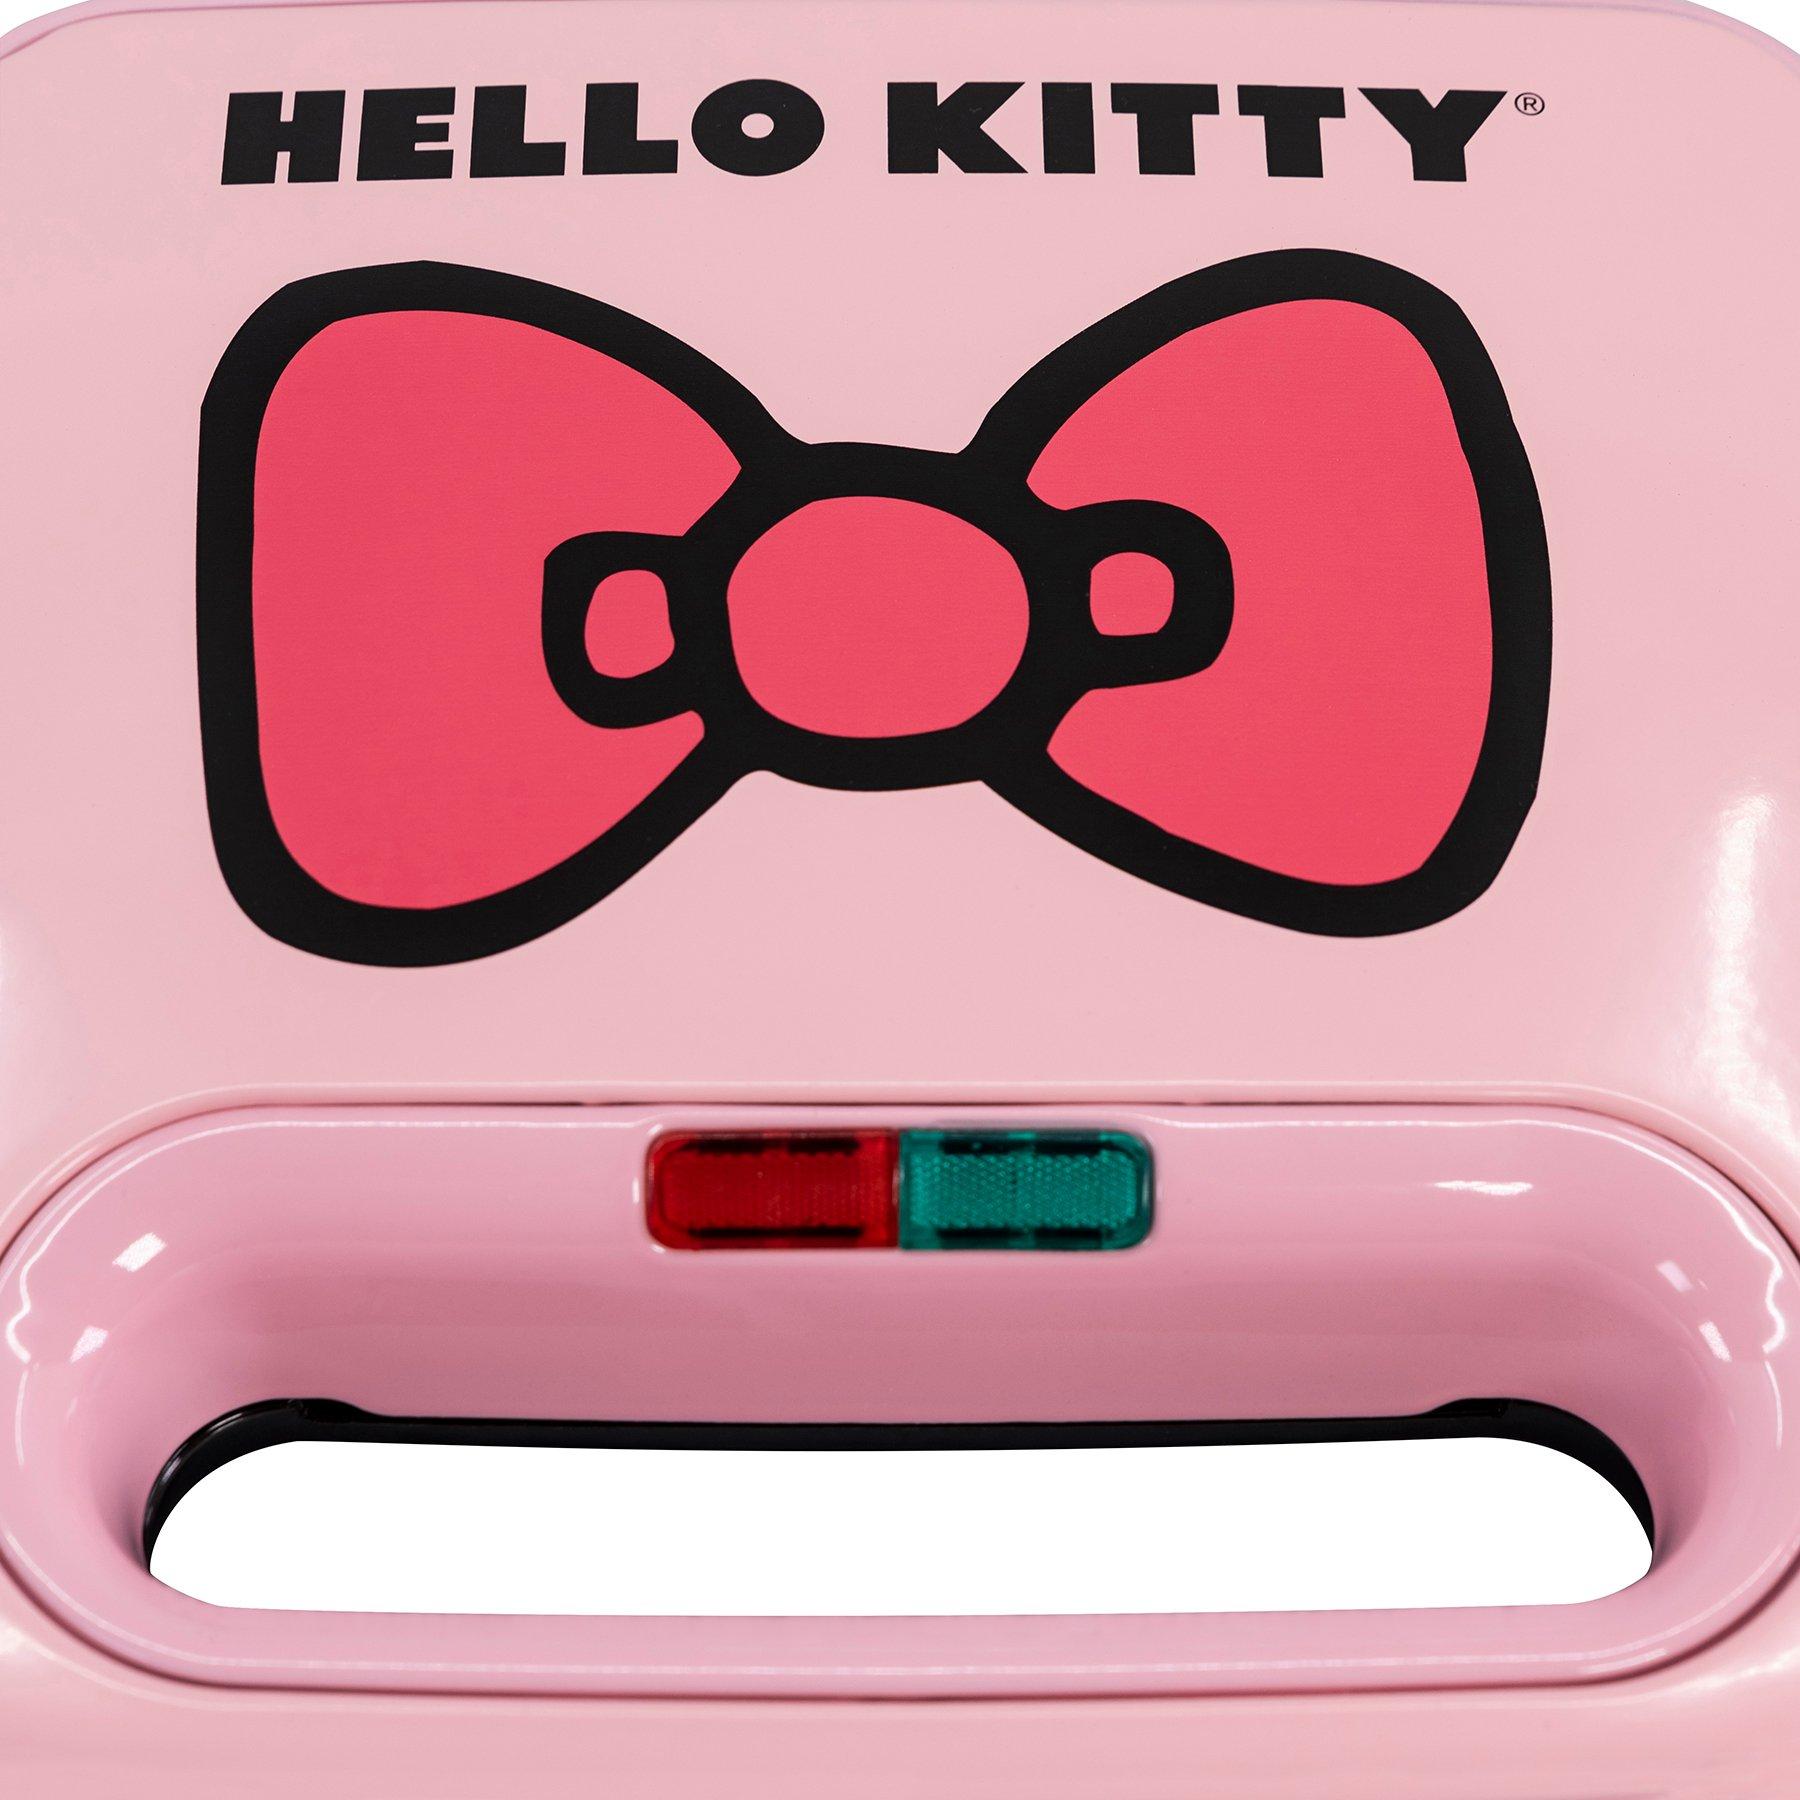 https://media.gamestop.com/i/gamestop/20005548_ALT06/Hello-Kitty-Grilled-Cheese-Maker?$pdp$